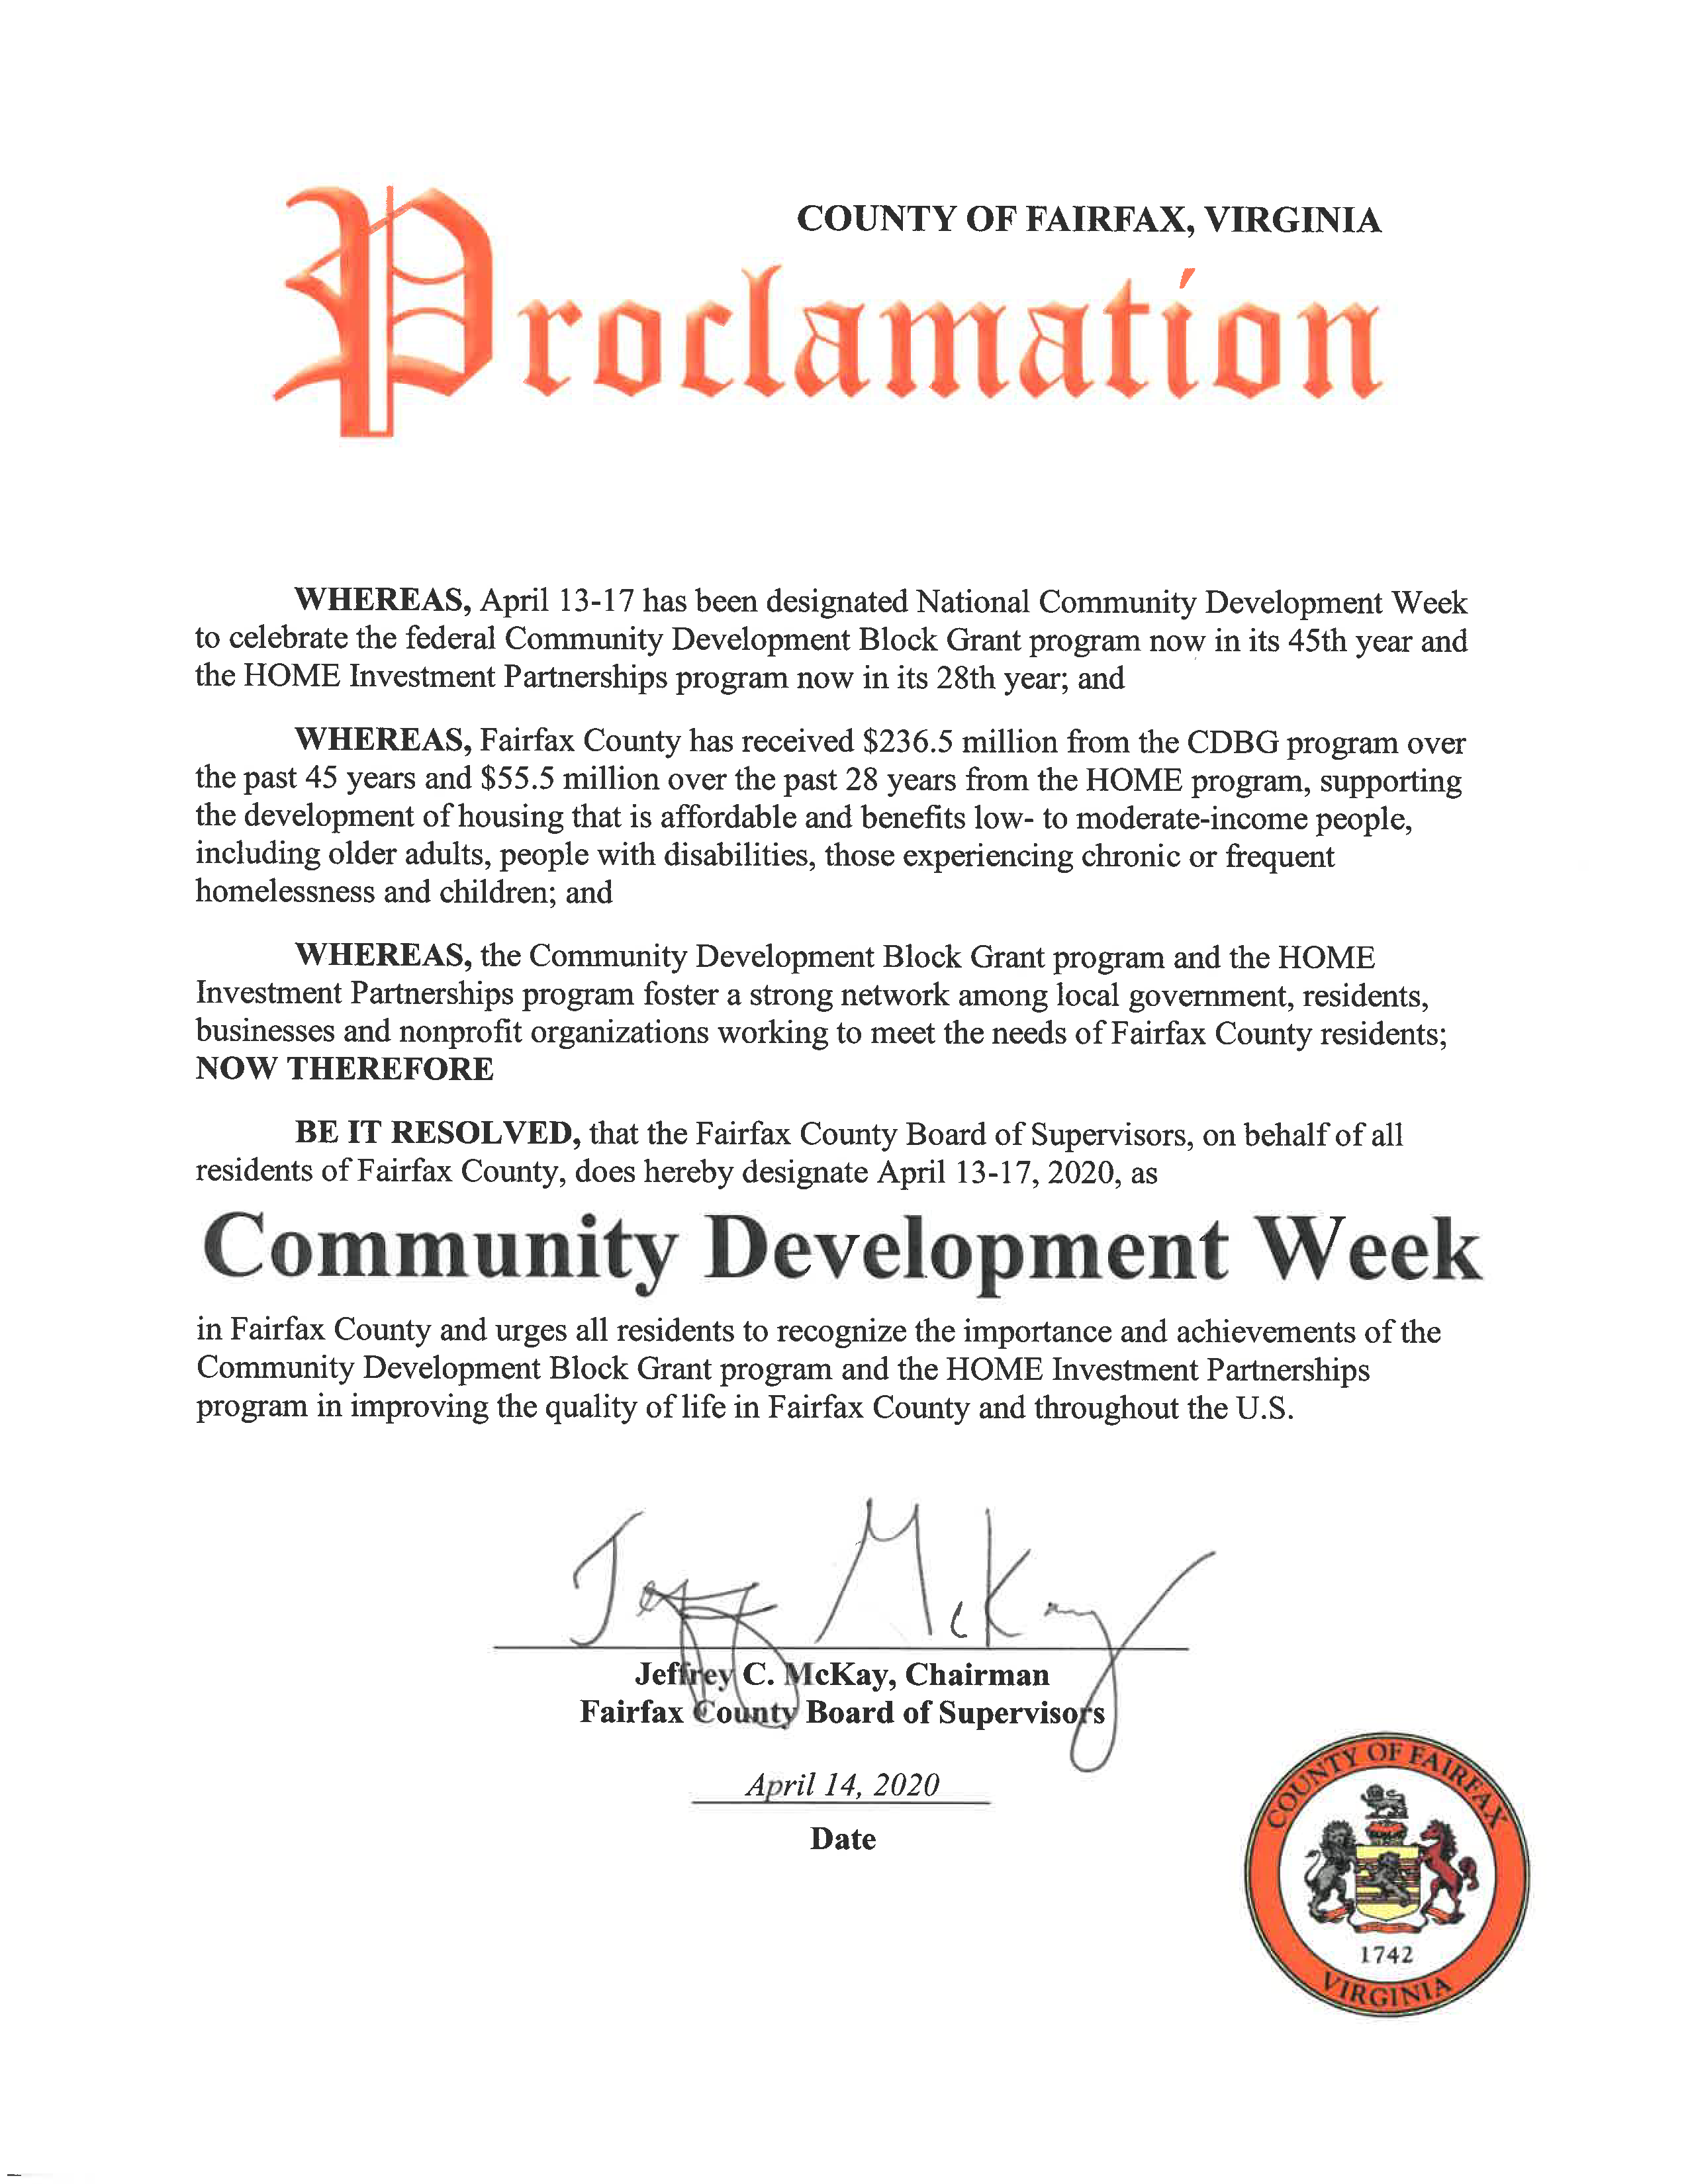 Community Development Week 2020